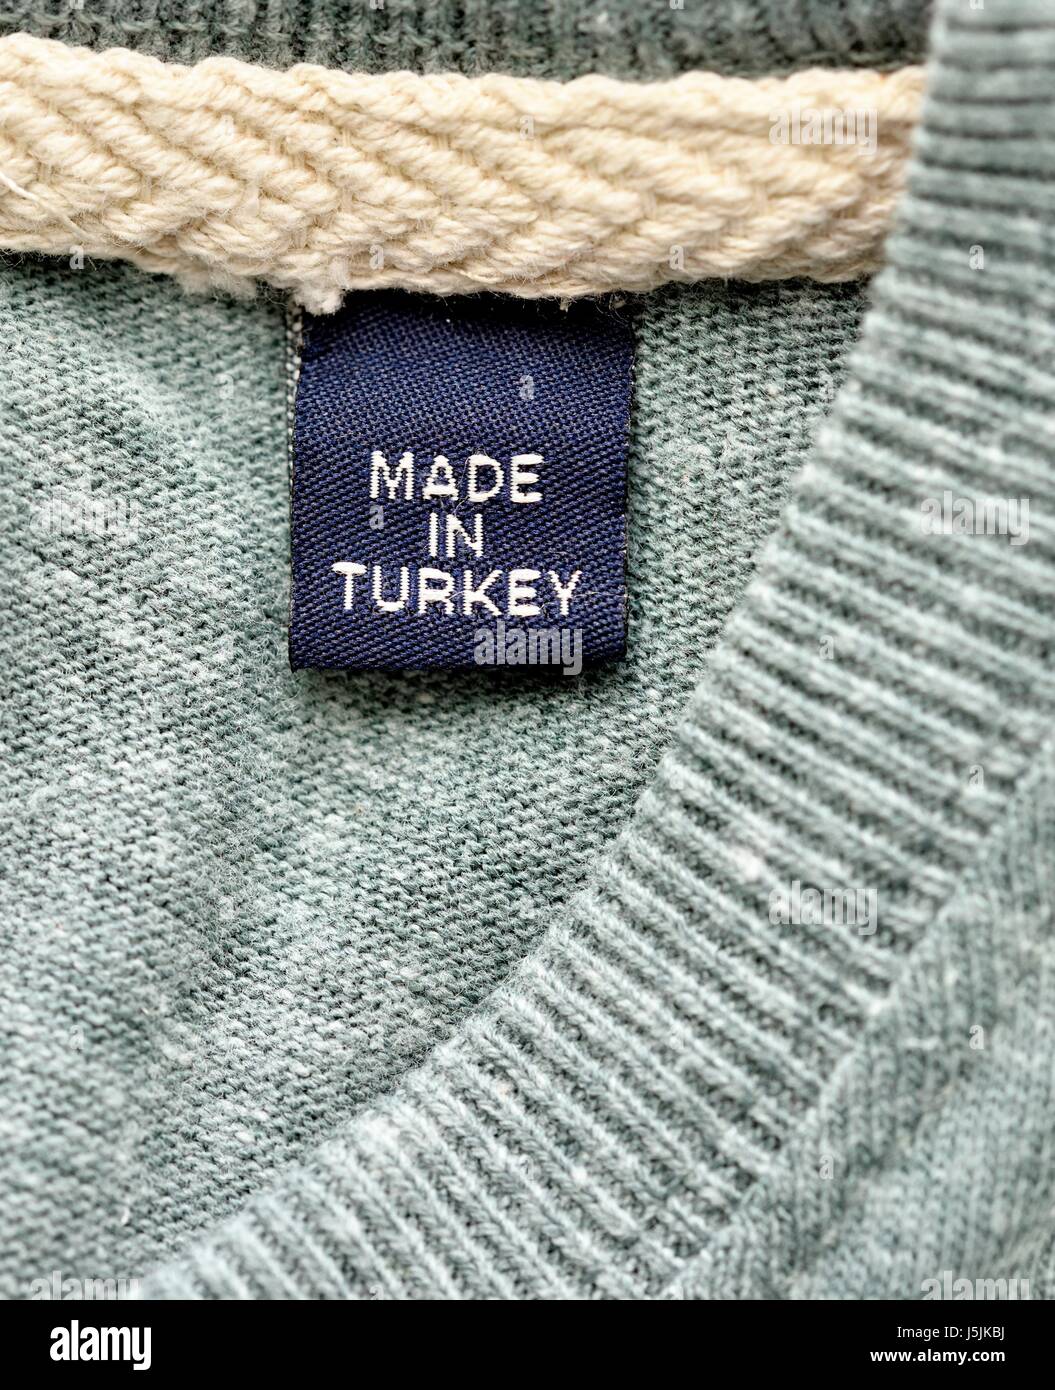 Made in turkey Stock Photo - Alamy